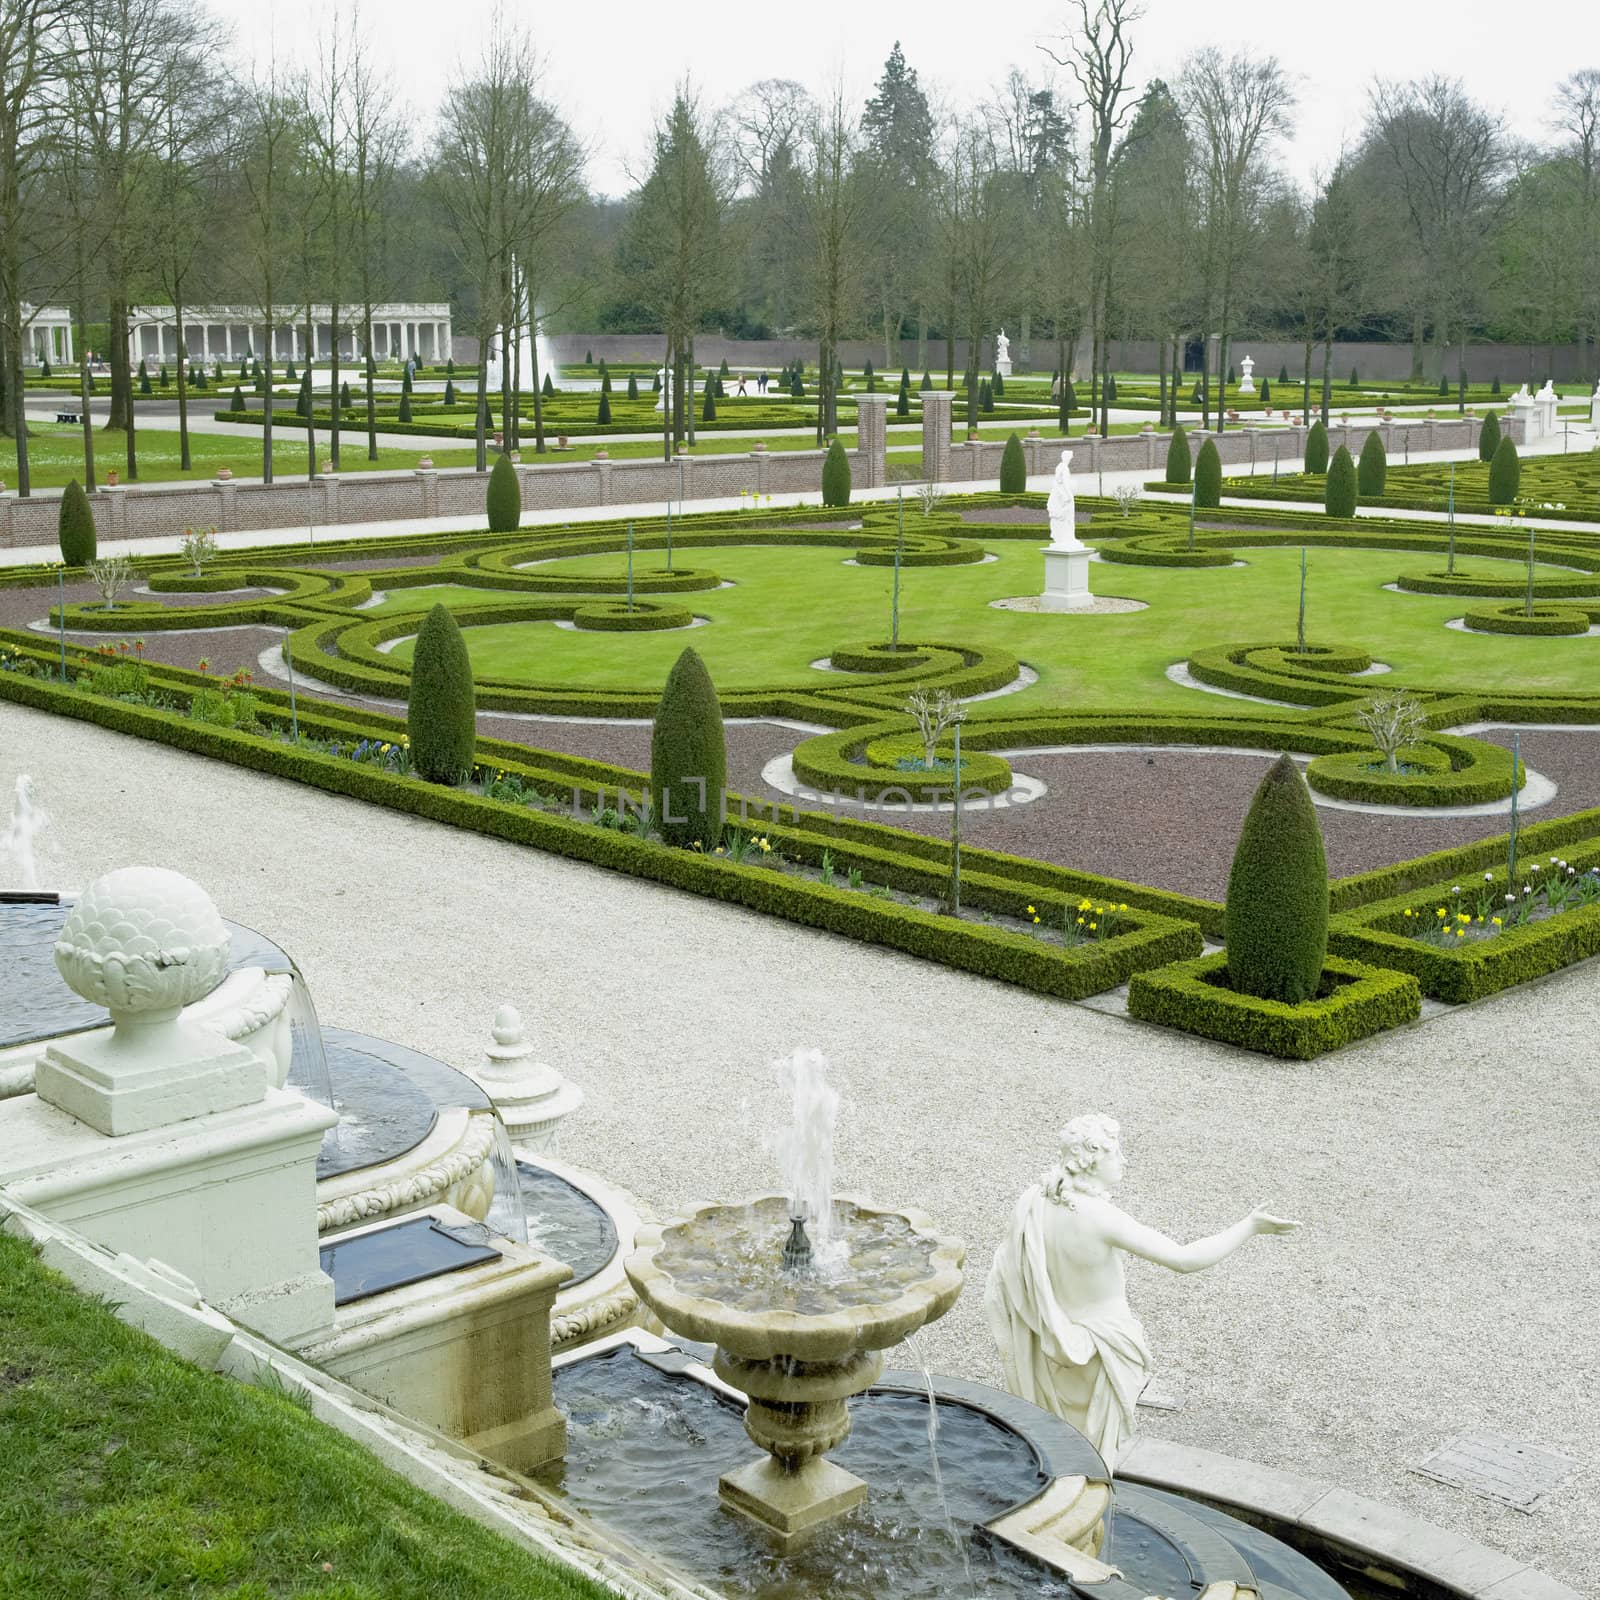 palace garden, Paleis Het Loo Castle near Apeldoorn, Netherlands